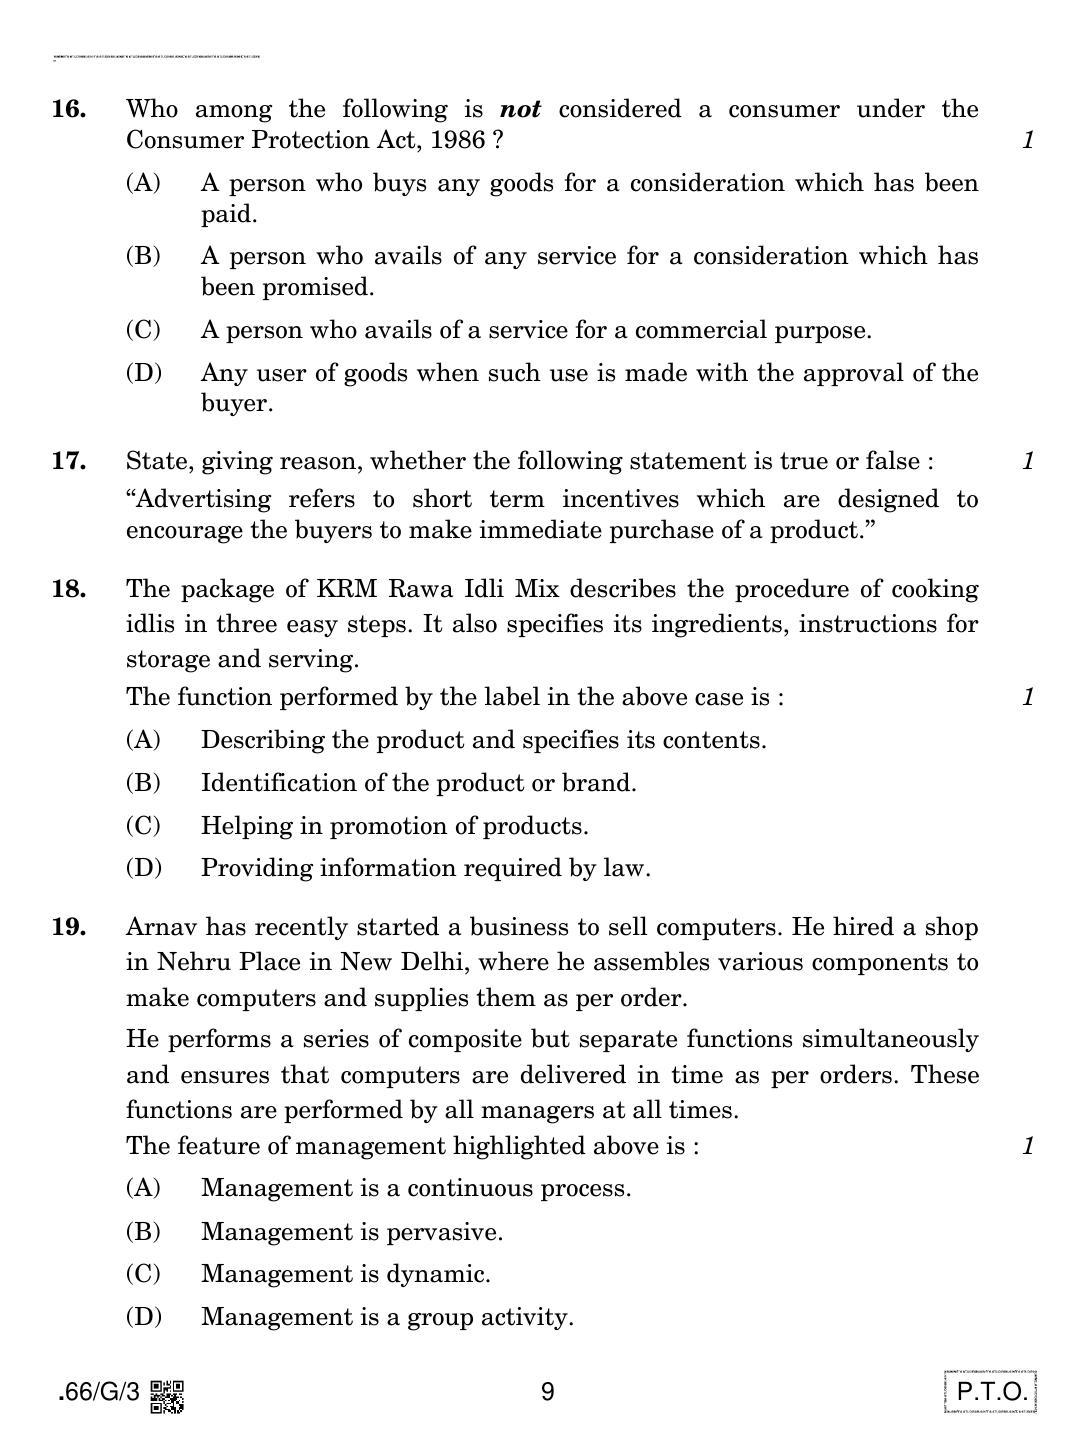 CBSE Class 12 66-C-3 - Business Studies 2020 Compartment Question Paper - Page 9